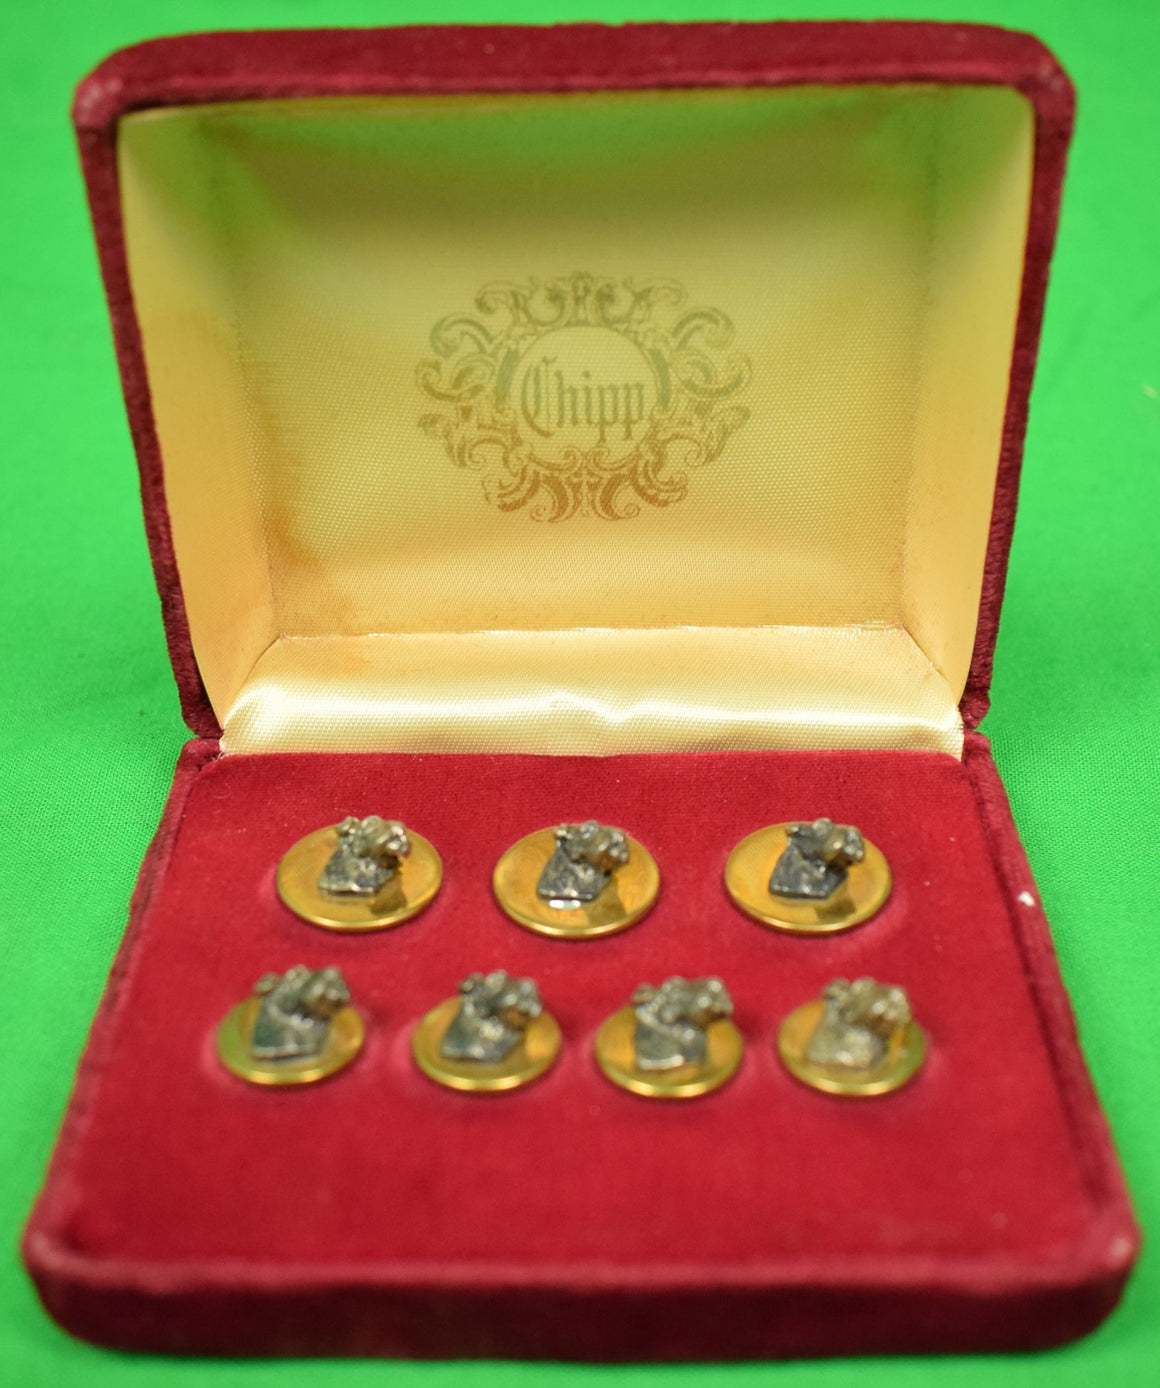 Chipp Dog-Head Brass Blazer Buttons New/ Old Stock in Box!